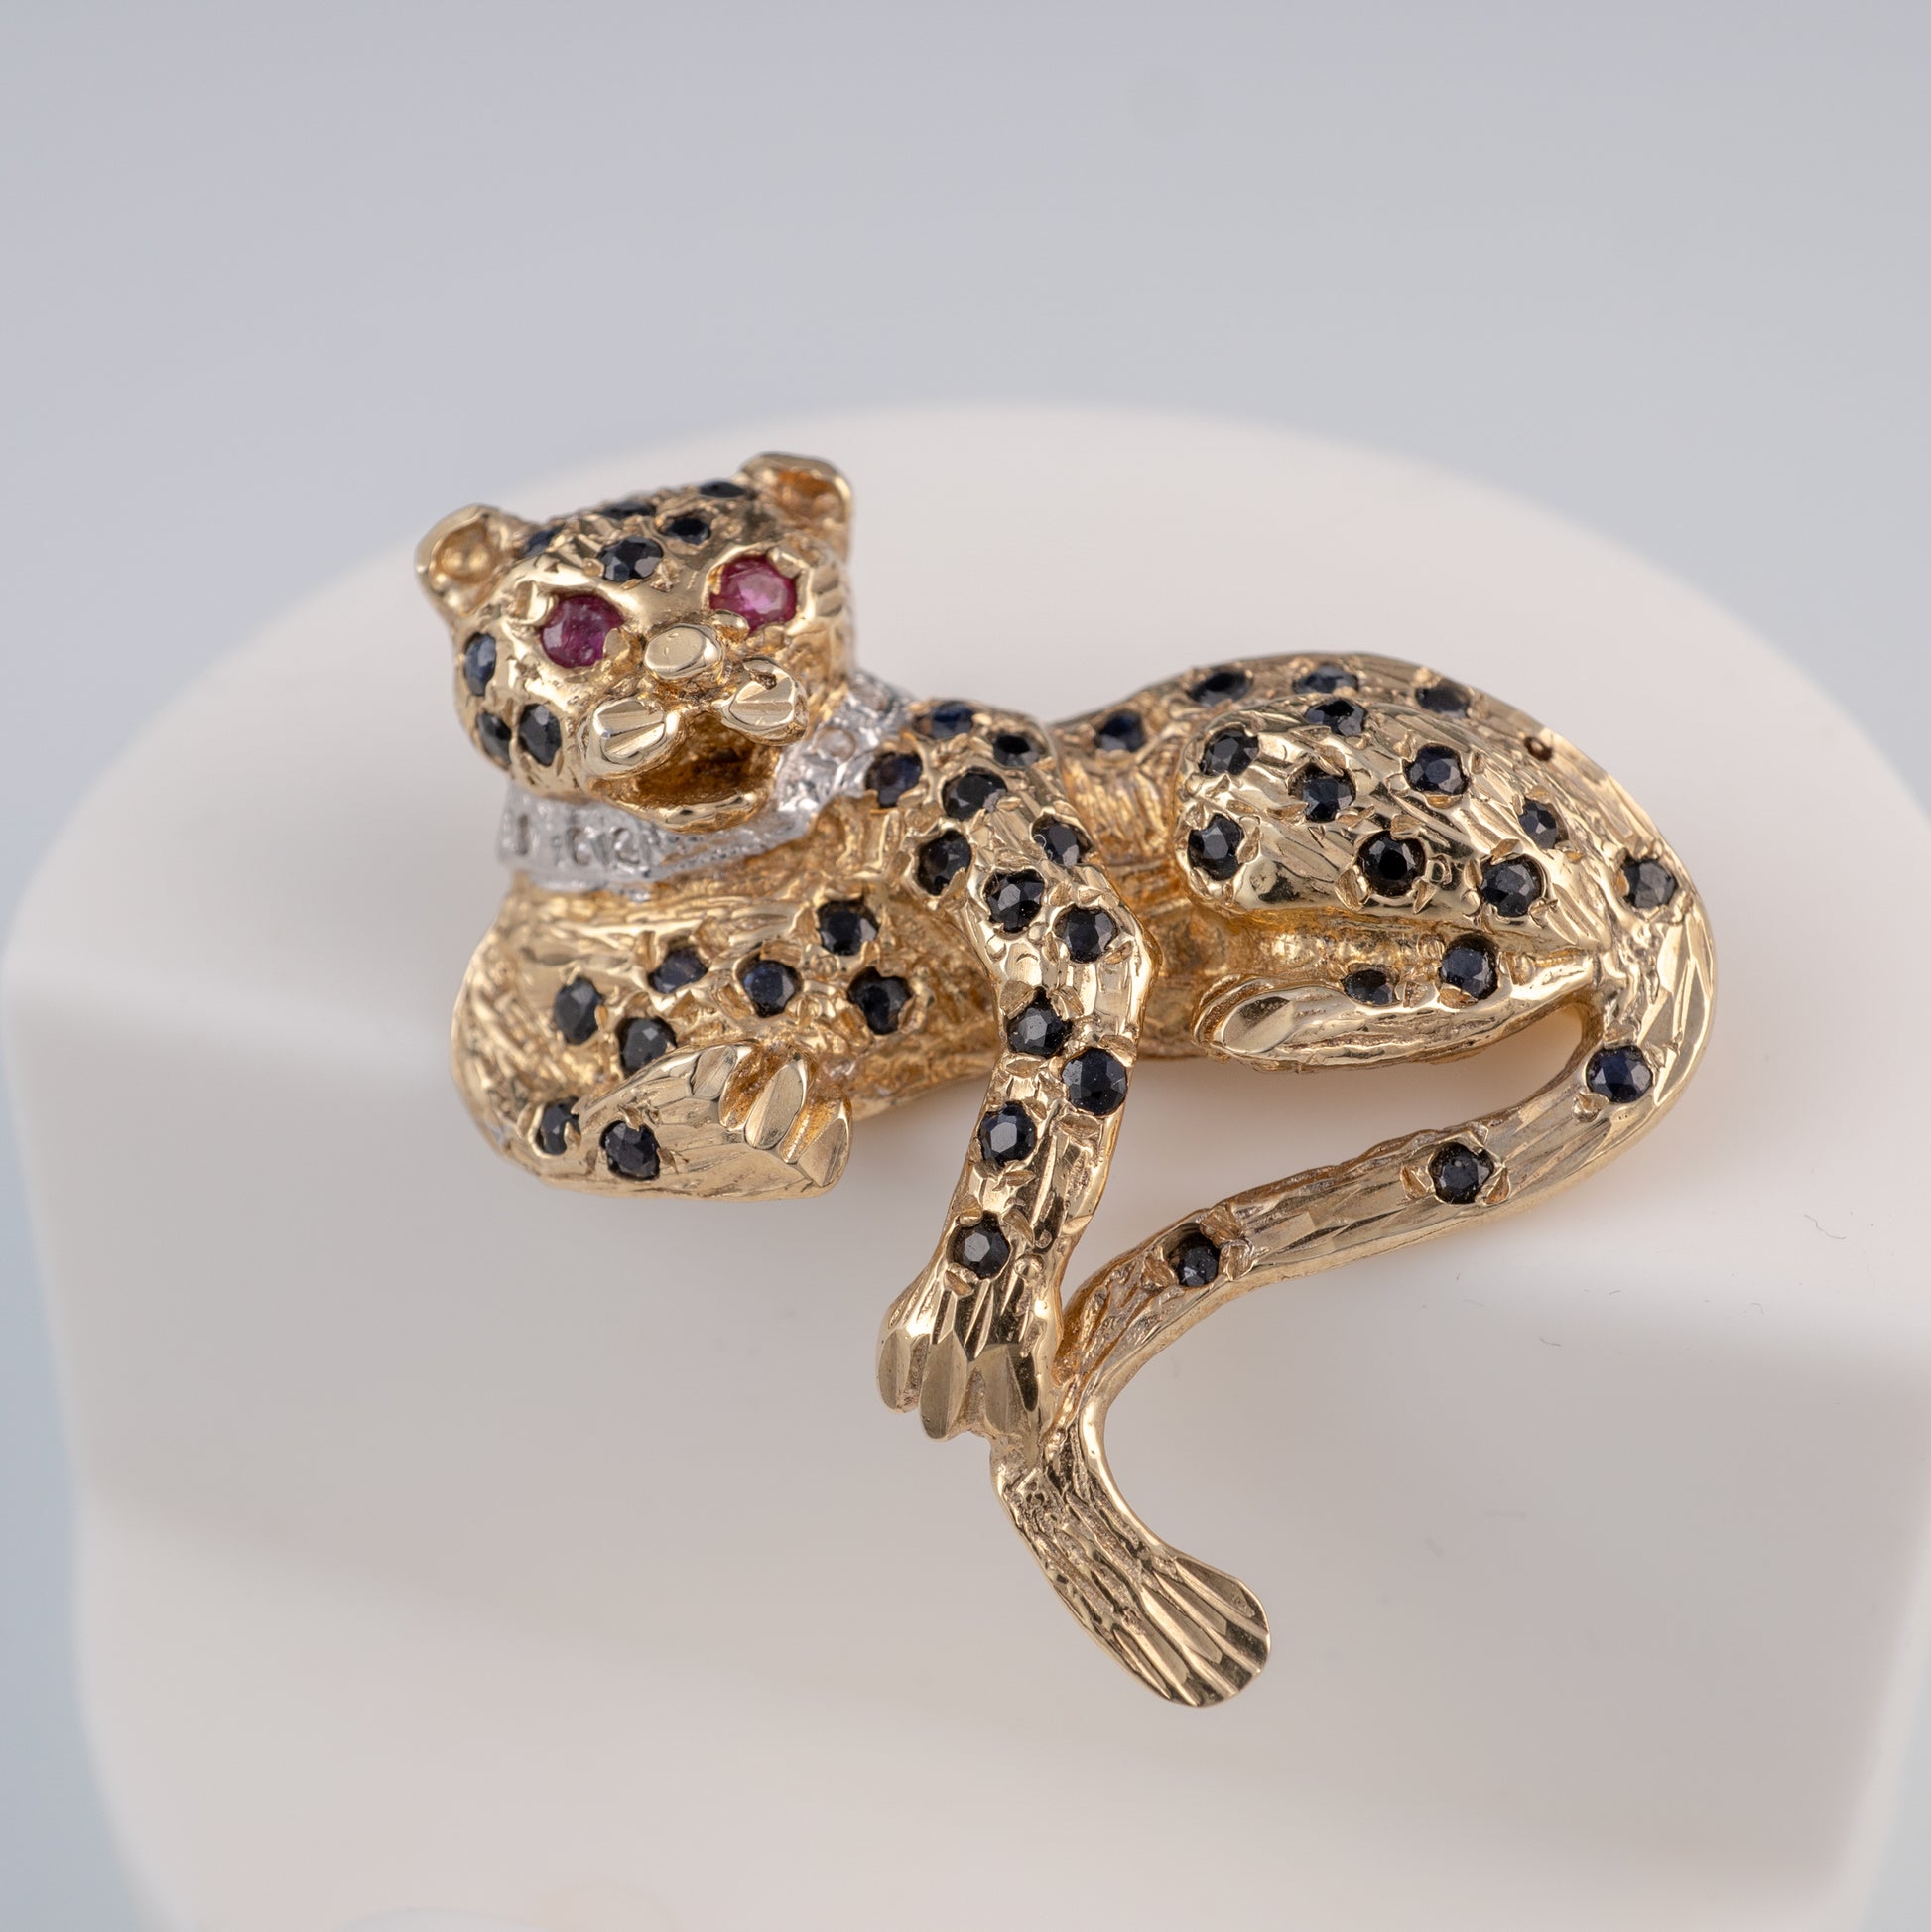 Vintage 9ct Gold Gemstone Precious Decorated Big Cat Brooch Pin - Hunters Fine Jewellery